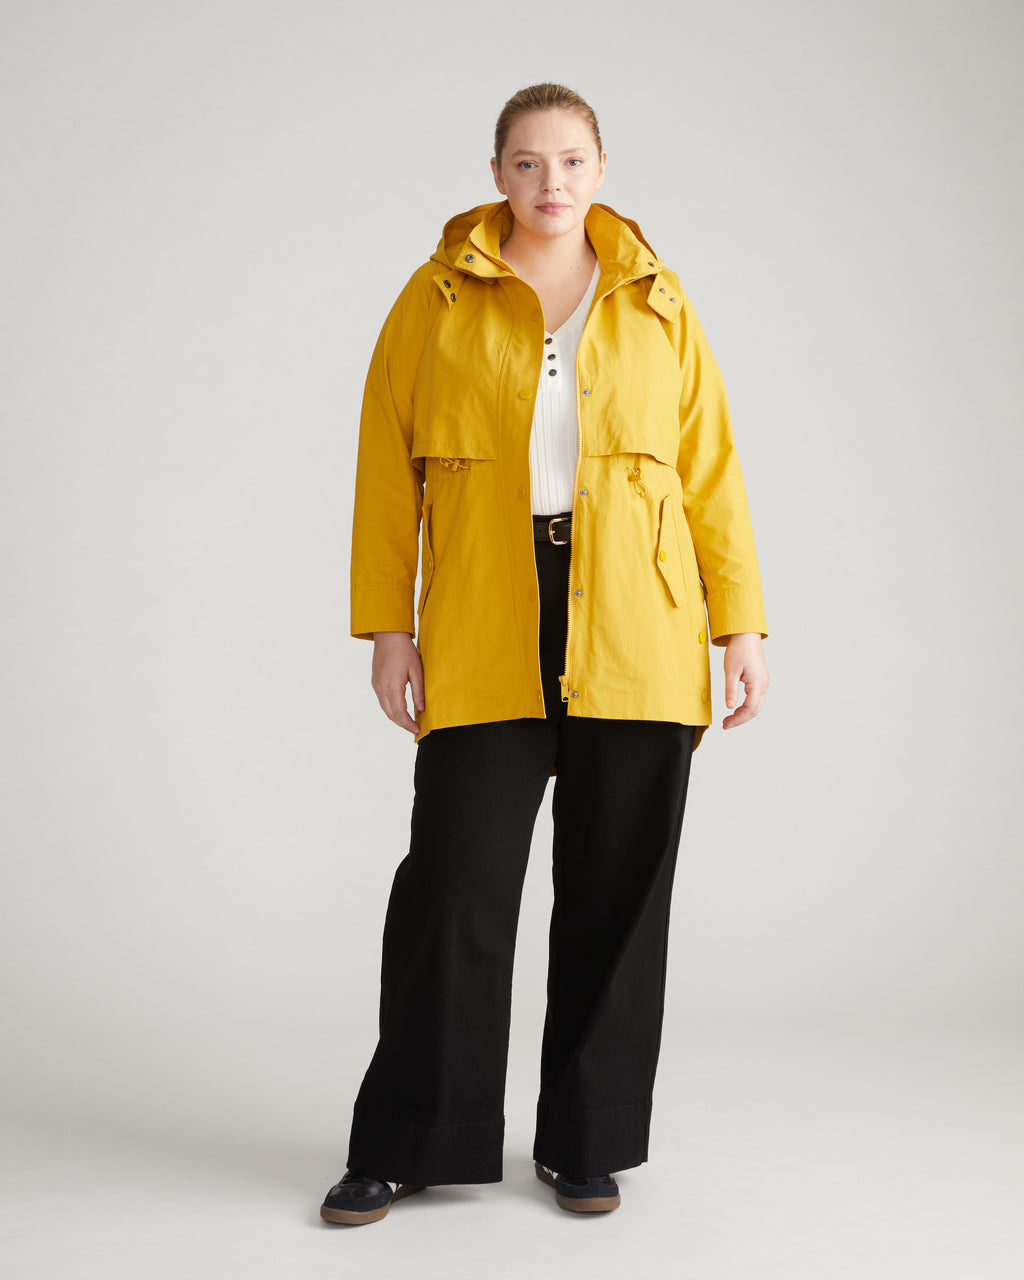 Outerwear - Women's Jackets & Coats